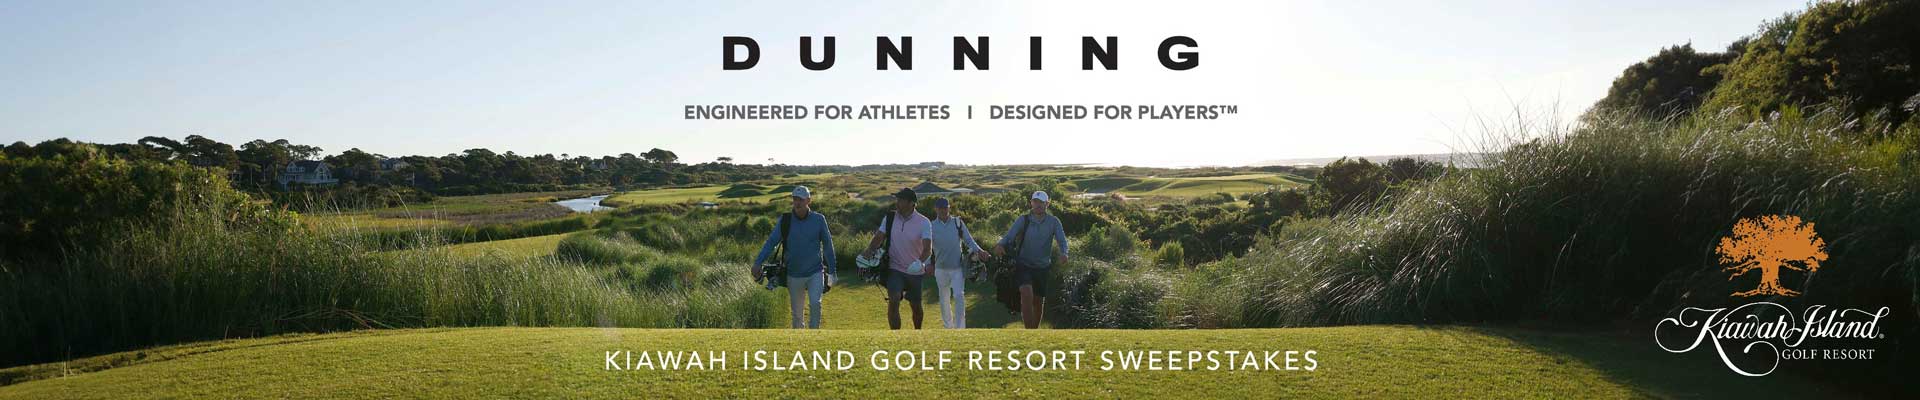 Dunning Kiawah Island Golf Resort Sweepstakes 2023